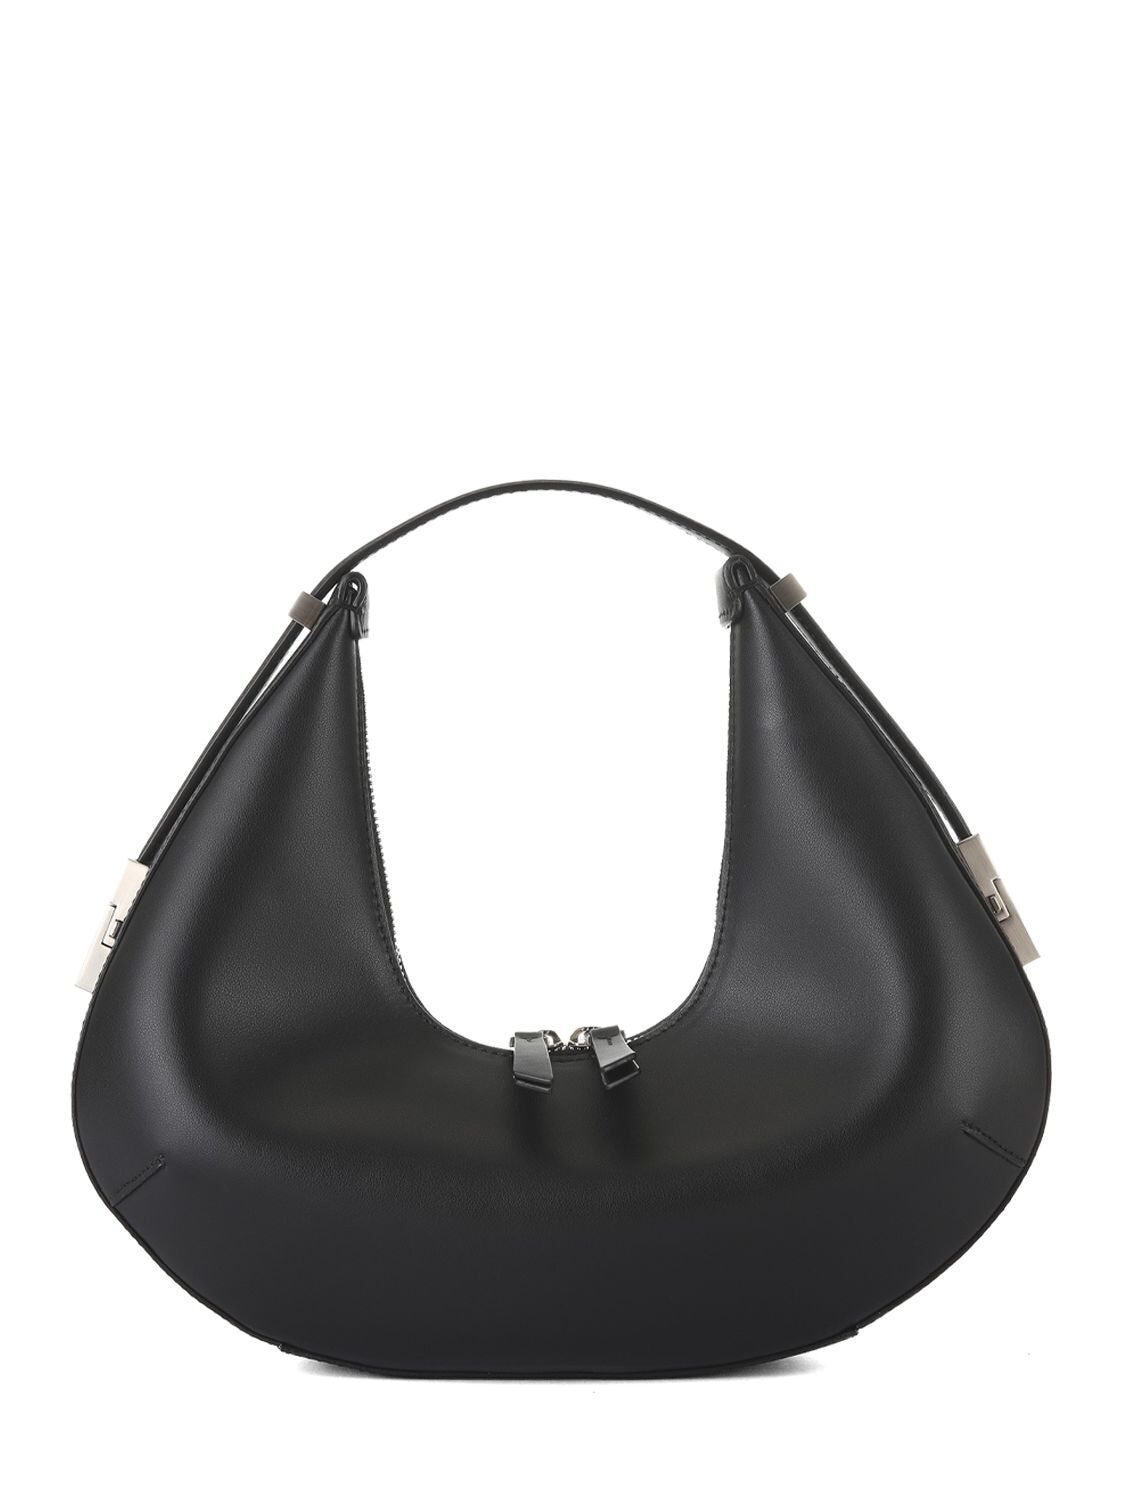 OSOI Toni Hobo Leather Shoulder Bag in black